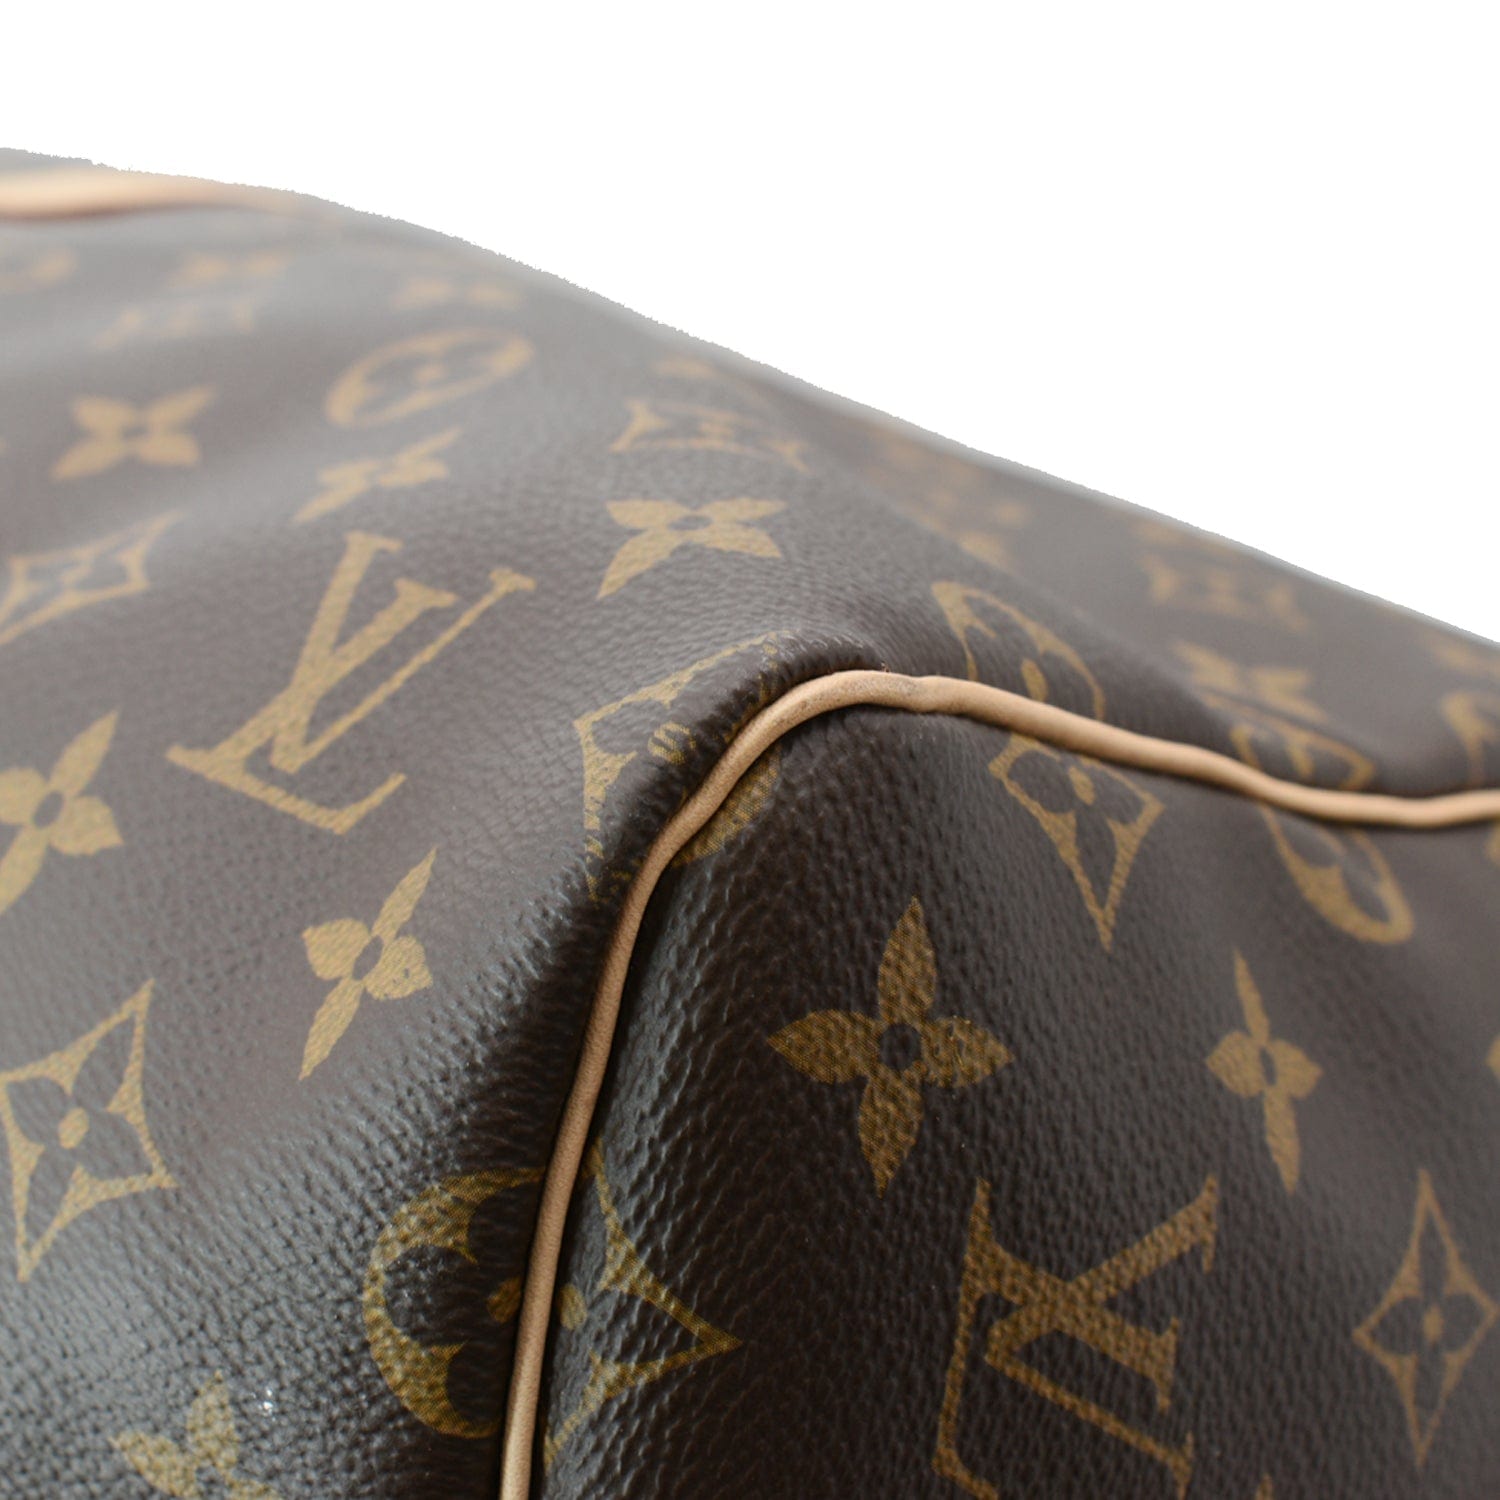 Louis Vuitton Keepall Travel bag 389612